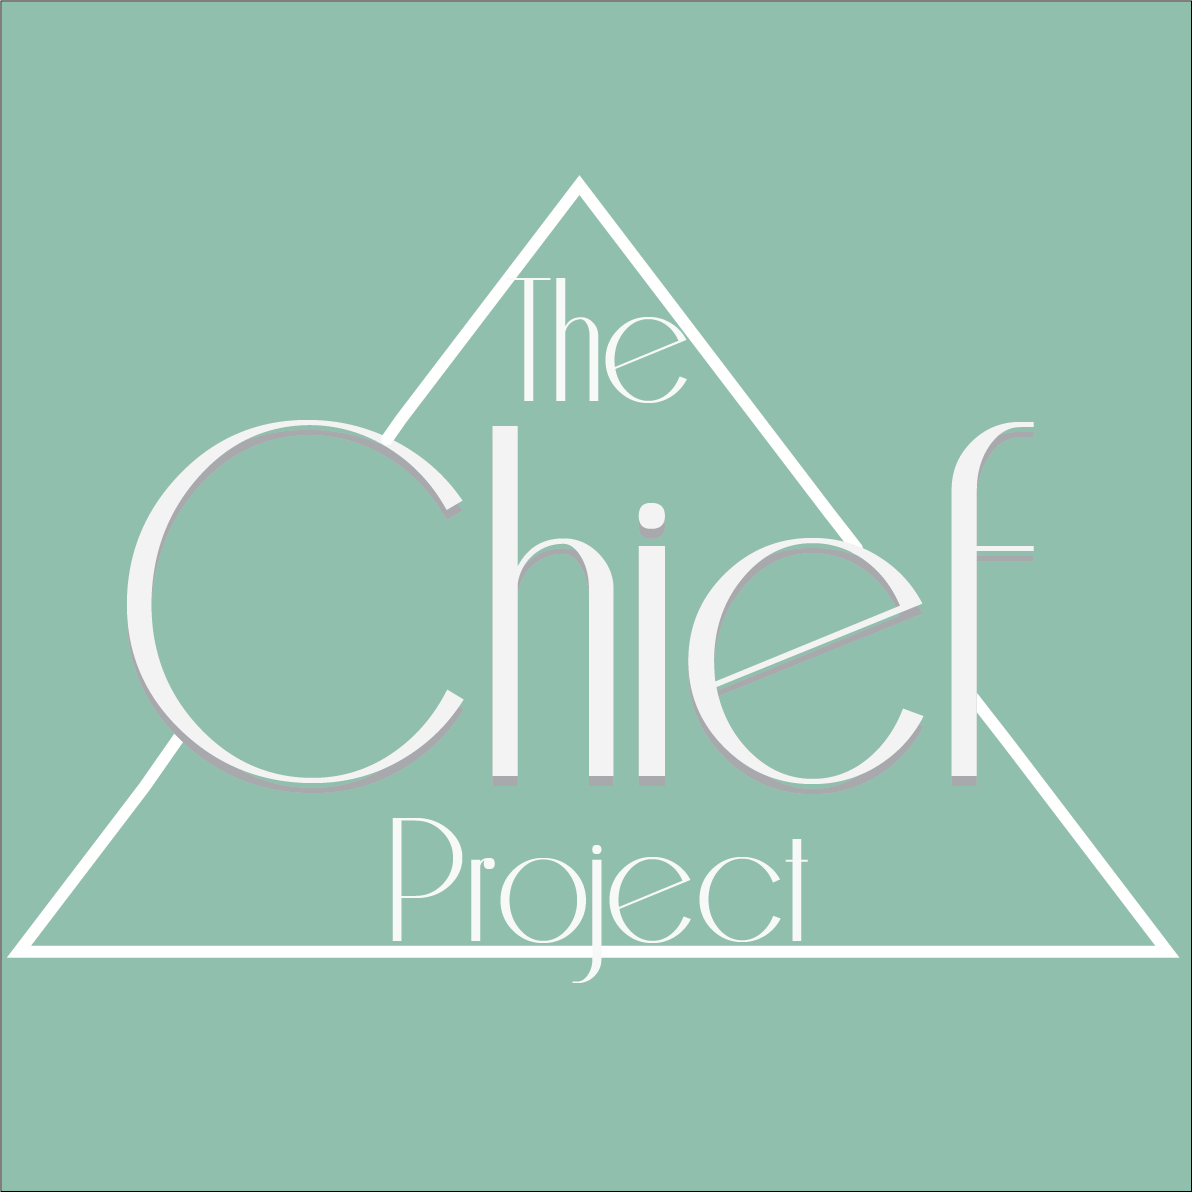 The Chief Project 手帕集作